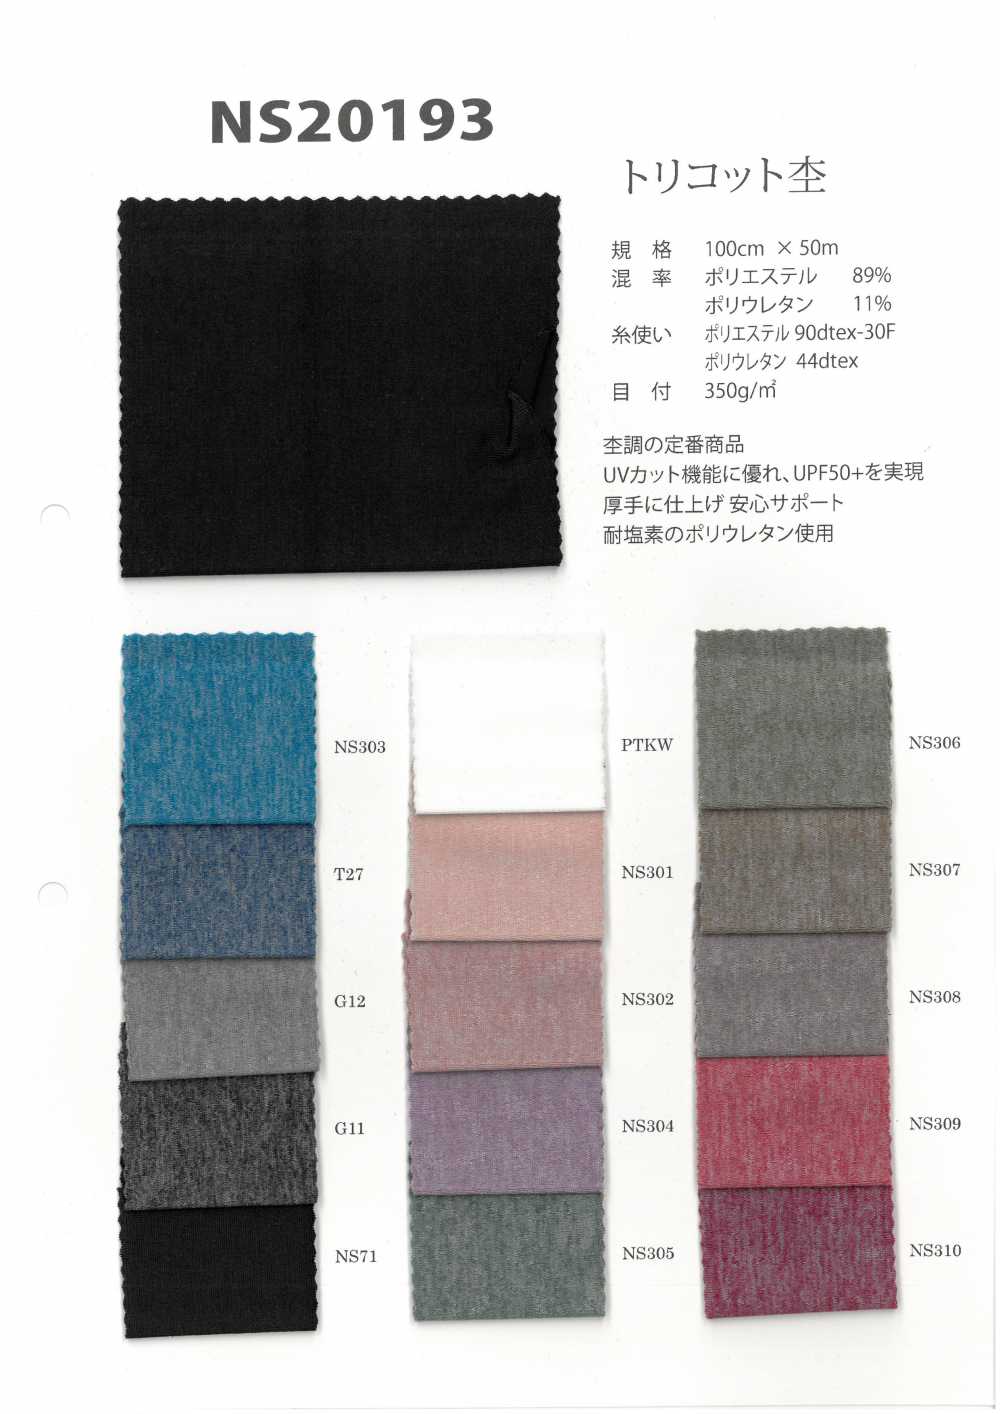 NS20193 Trikot Heidekraut[Textilgewebe] Japan-Strecke